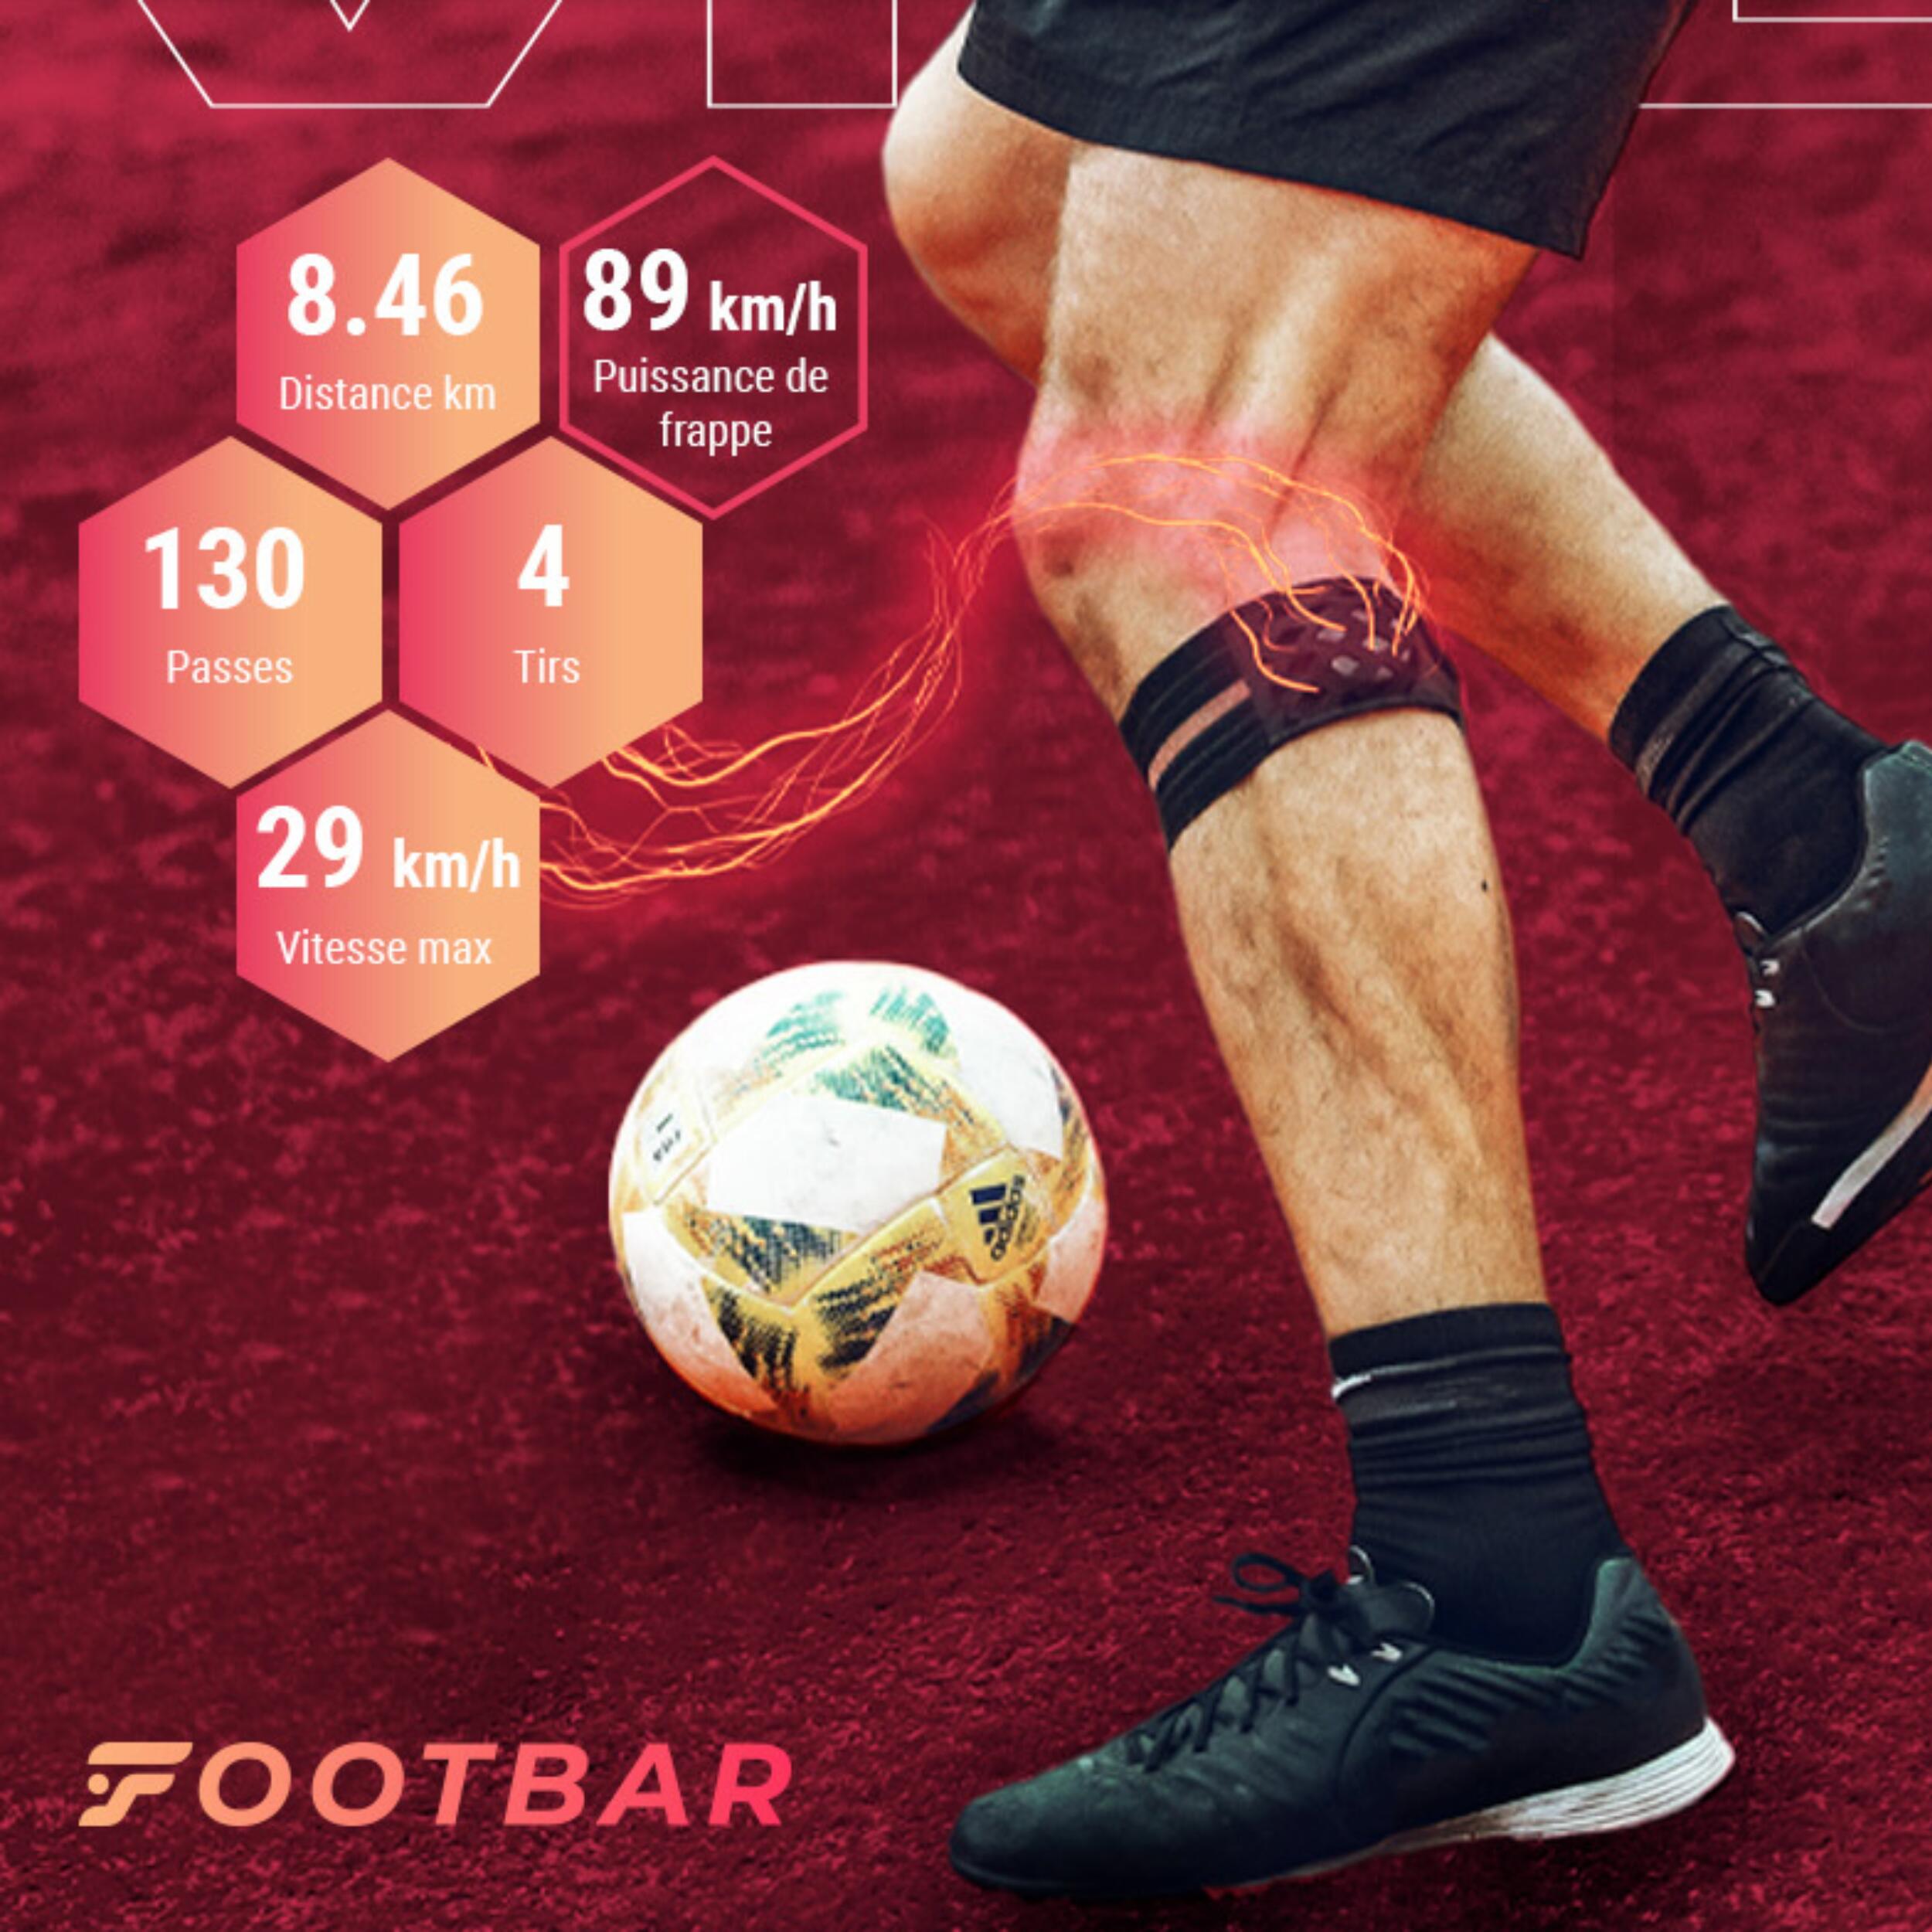 Footbar Meteor - Connected Football Tracker 6/12